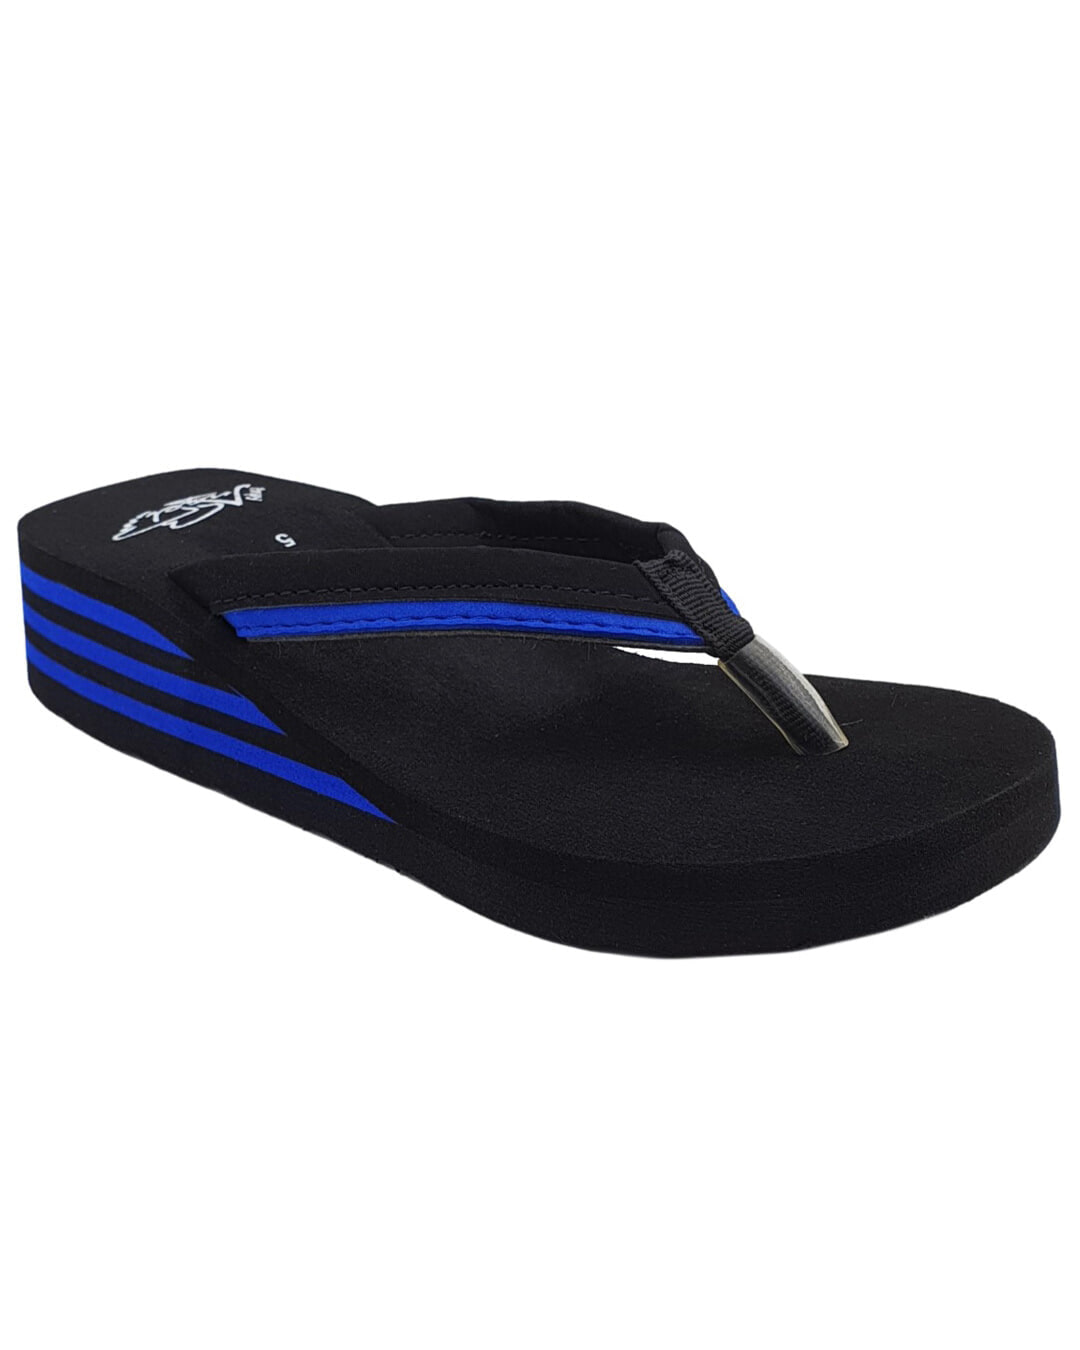 Shop Pampy Angel Lined Heel Blue Slipper Slides Flipflops for Women-Back